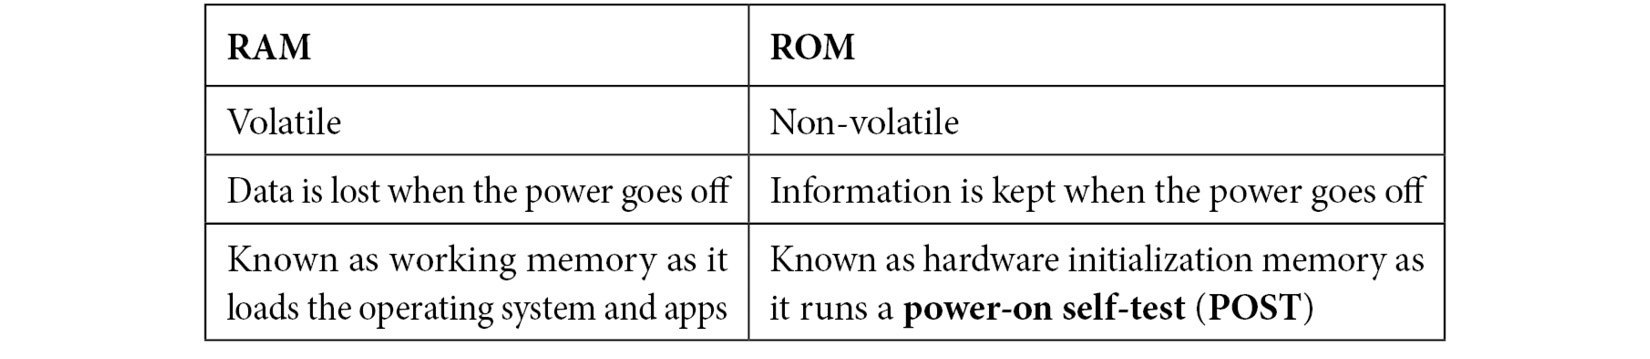 Table 10.1 – RAM versus ROM
